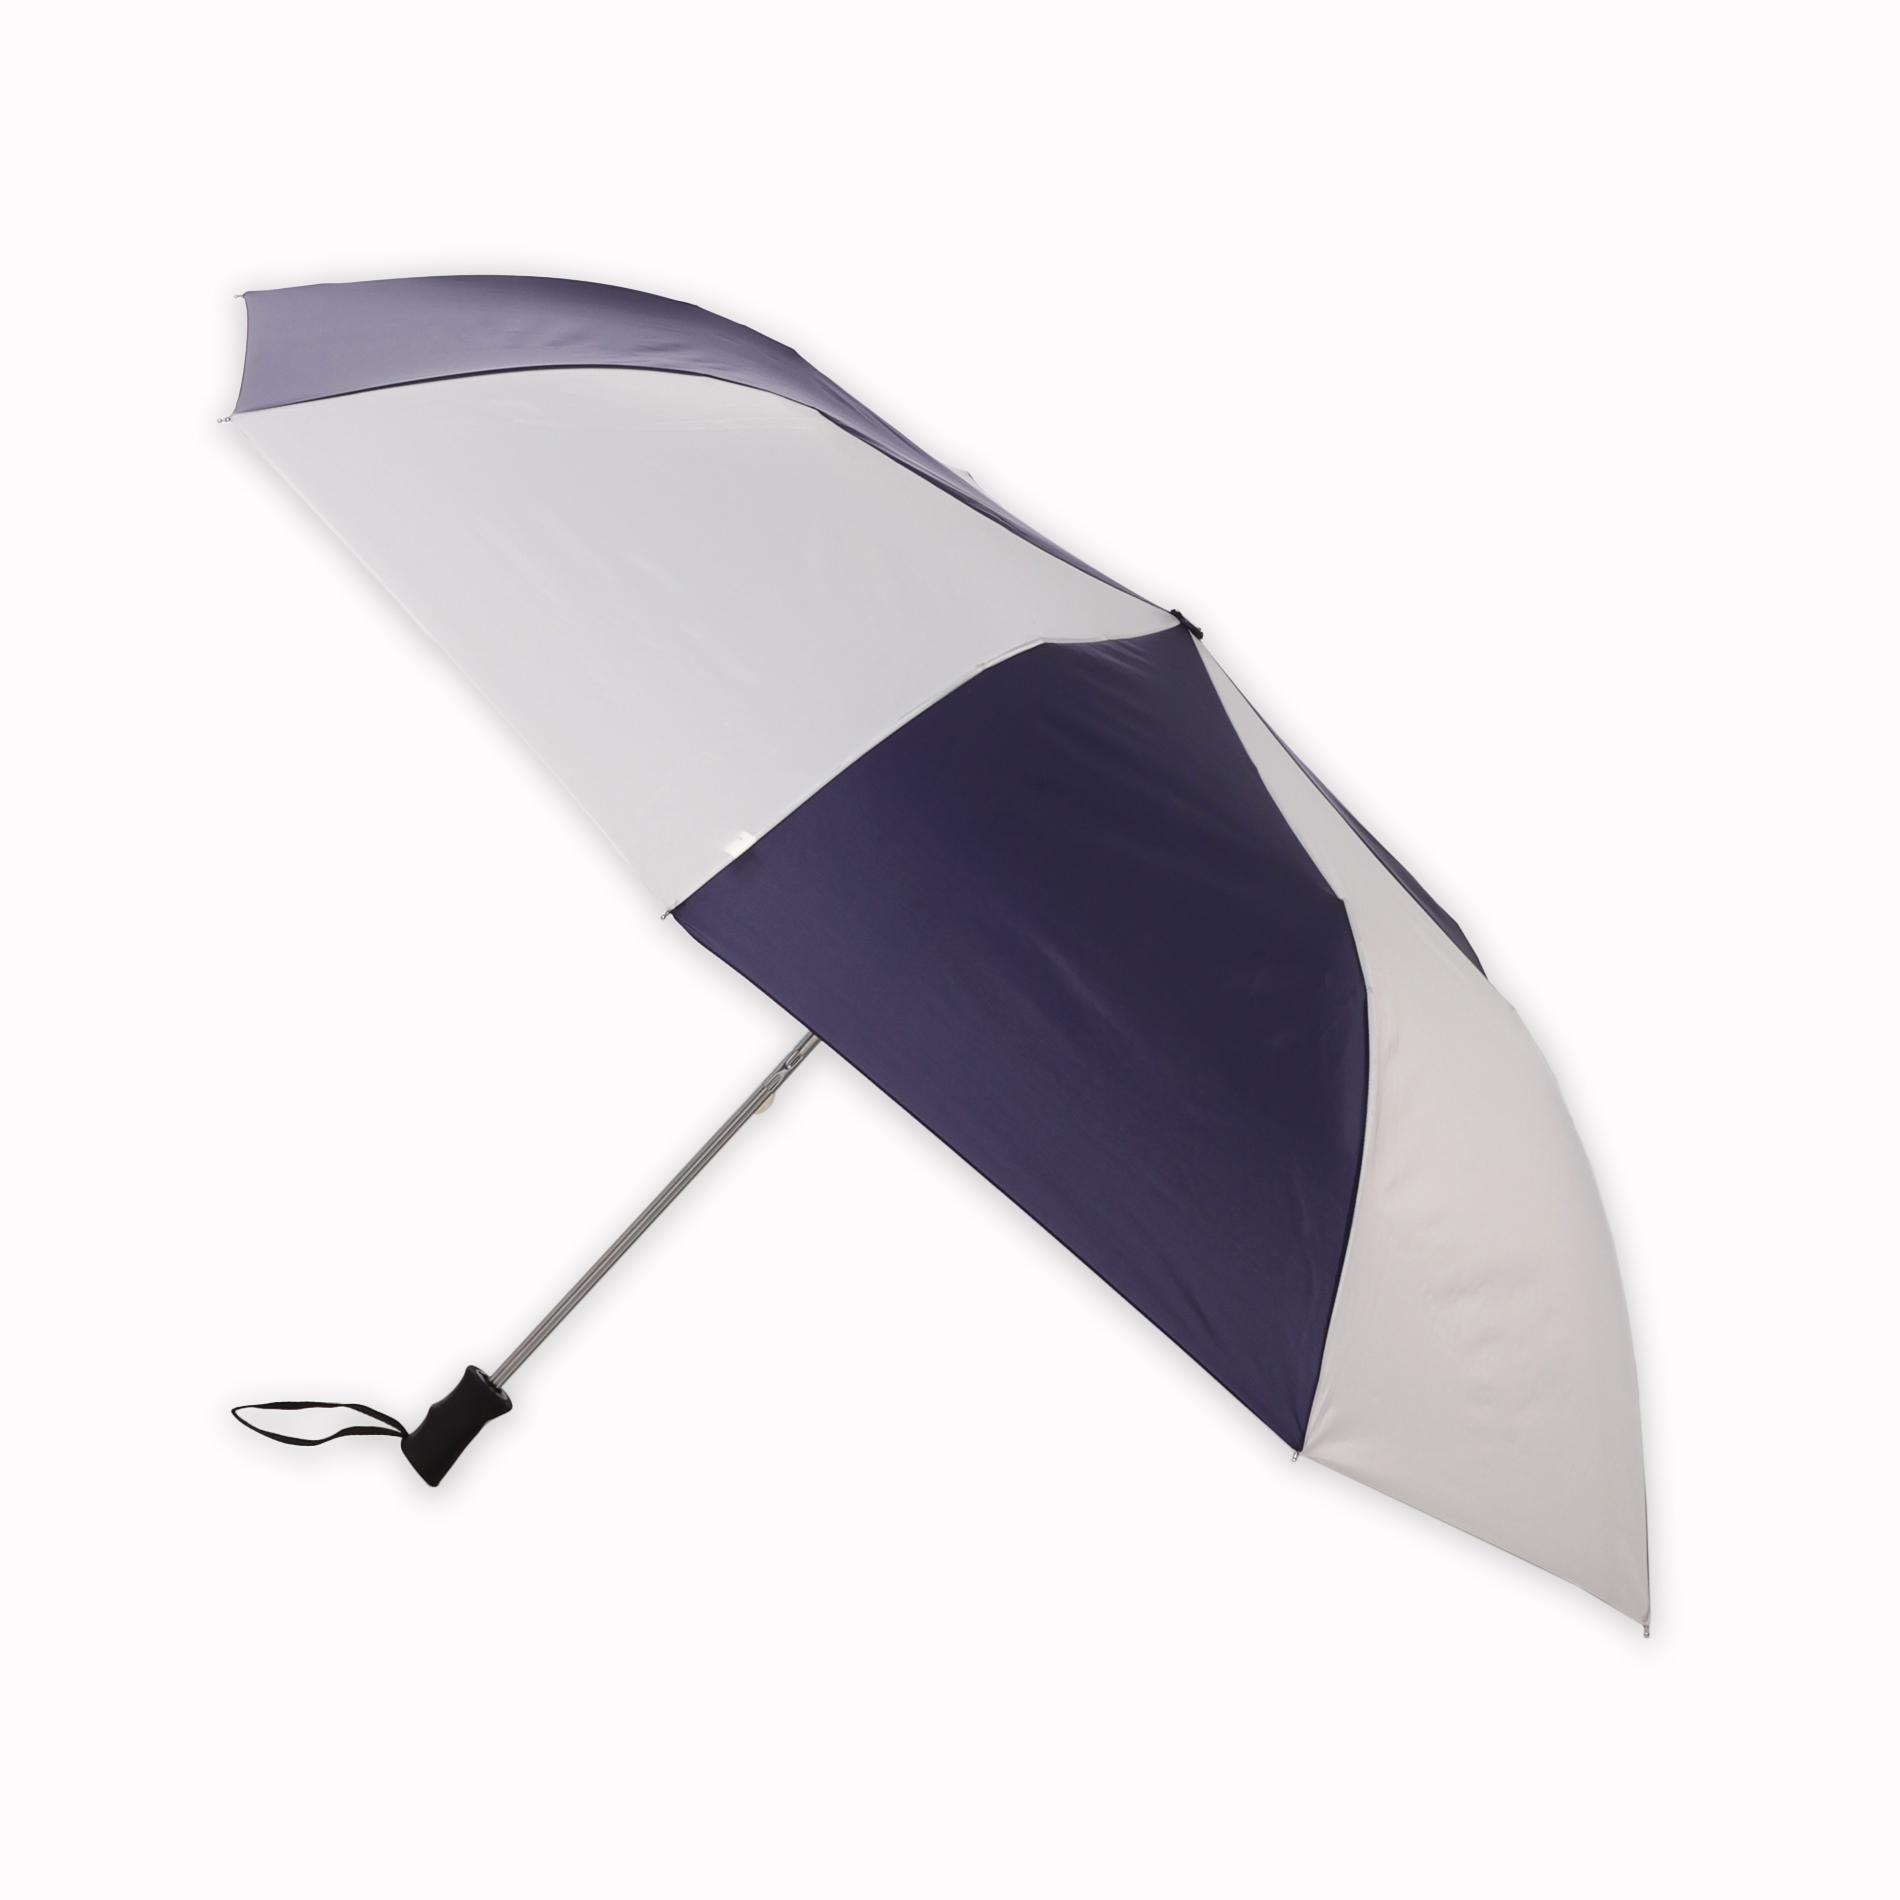 Totes Automatic Oversized Folding Umbrella - Two-Tone